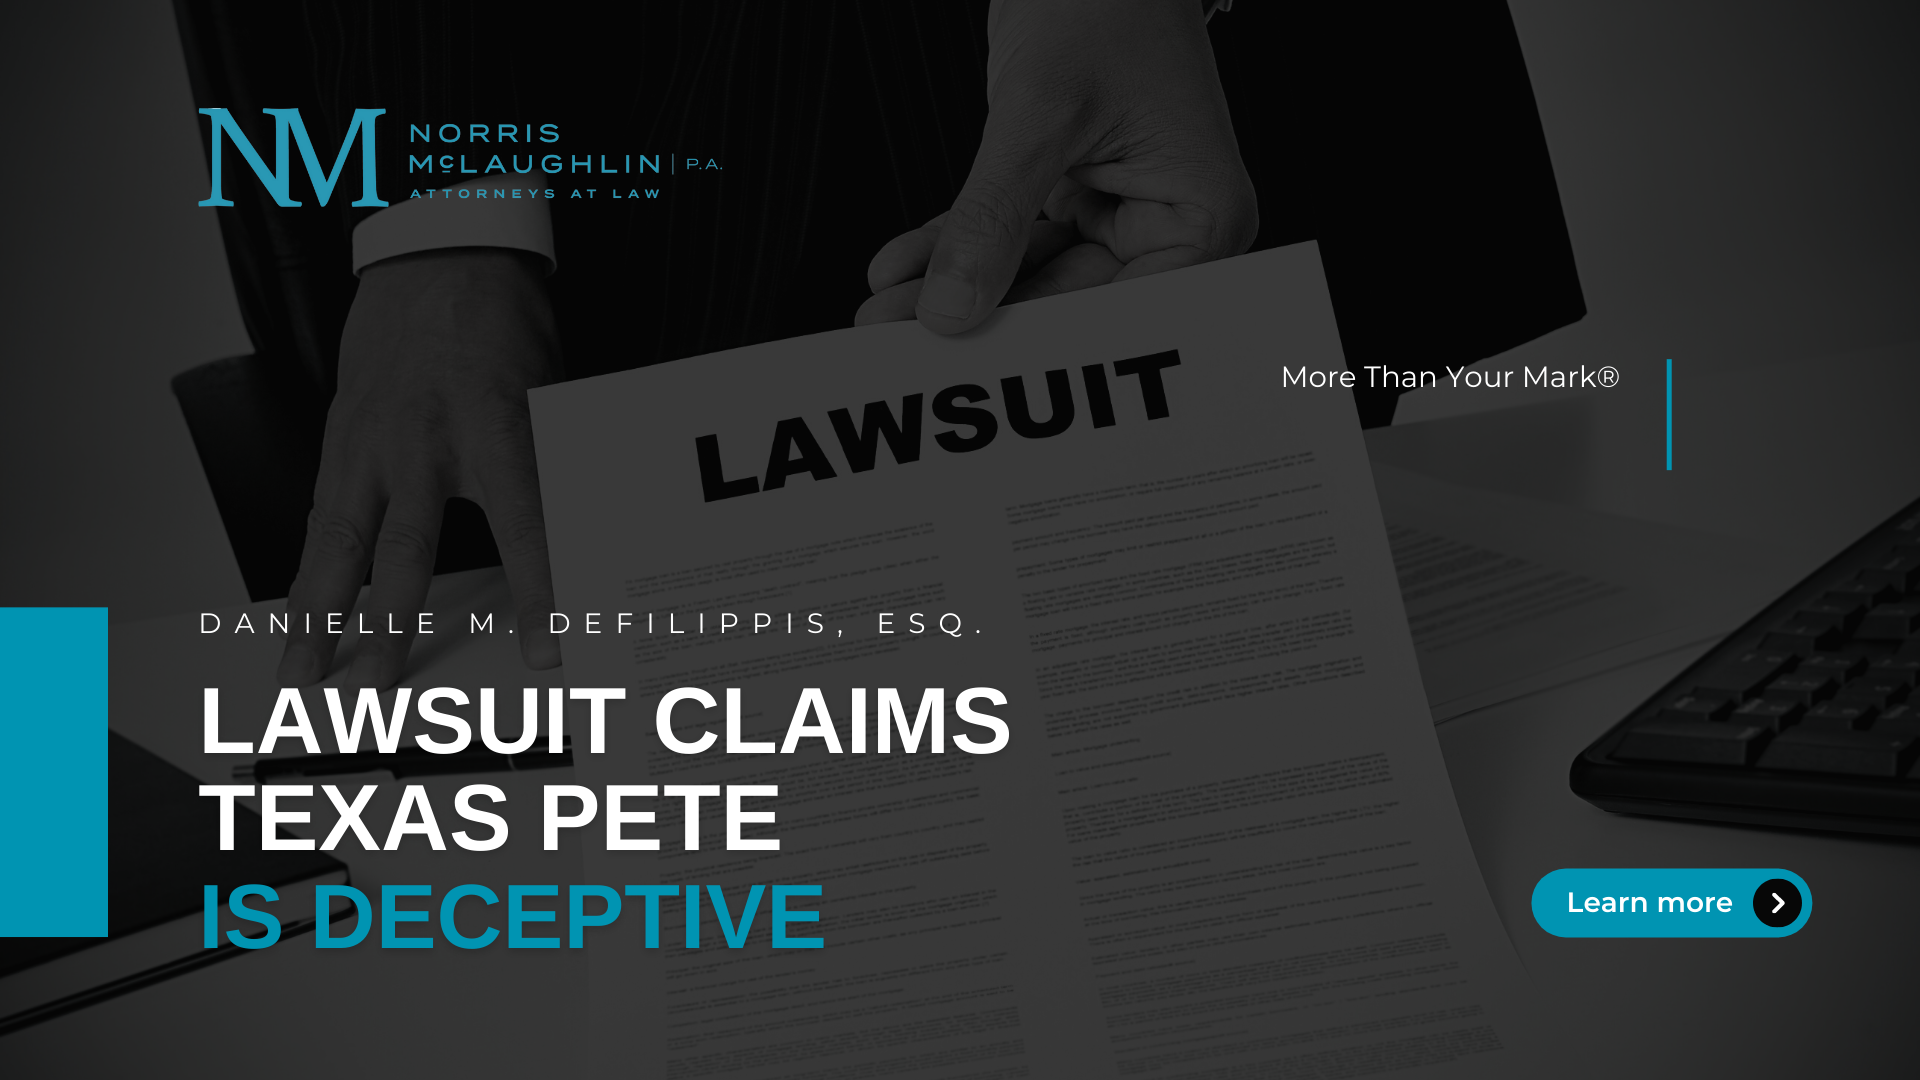 Lawsuit claims TEXAS PETE is deceptive